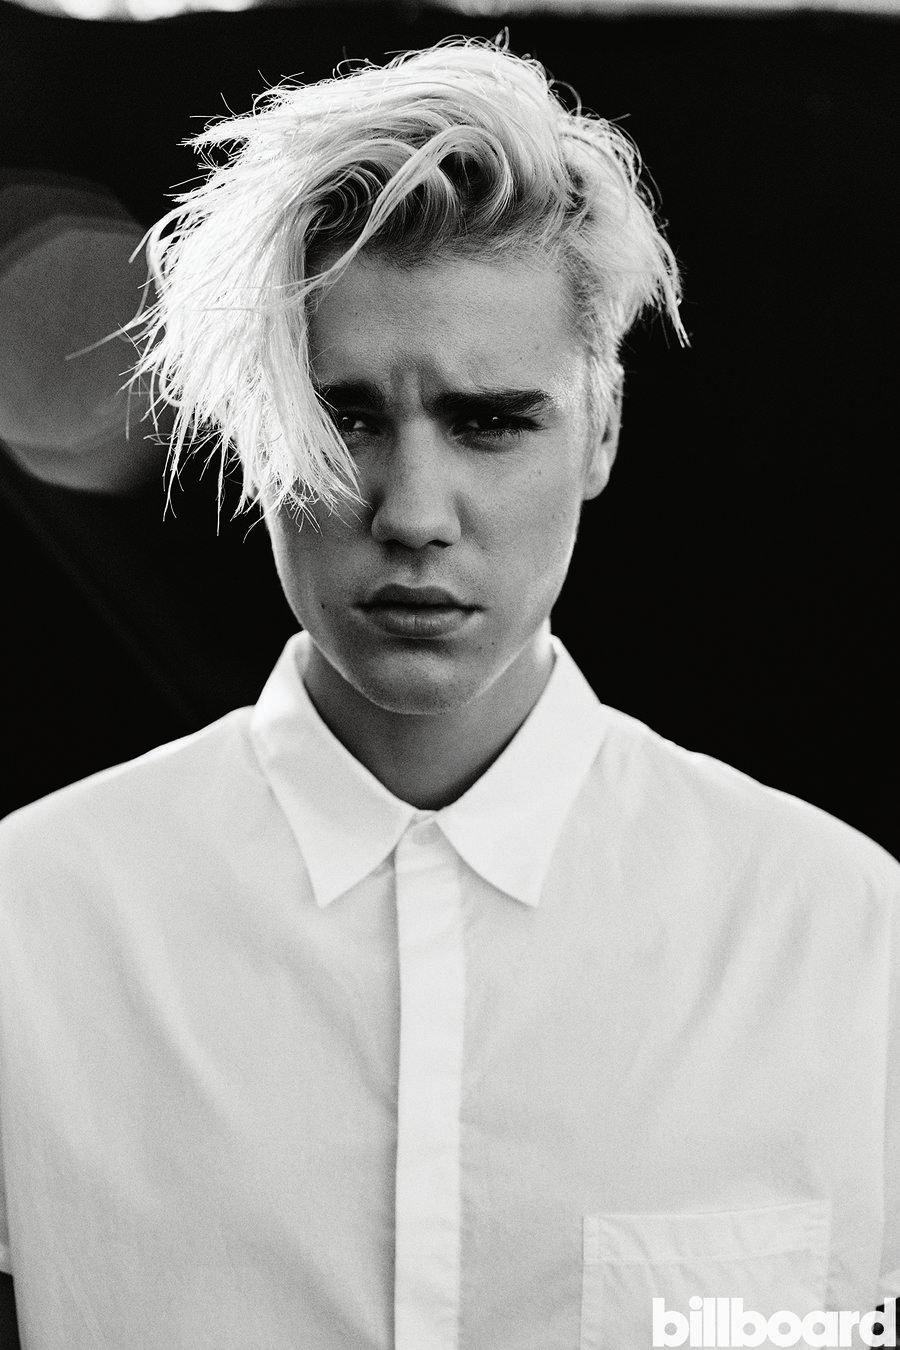 Justin Bieber Billboard Cover Shoot